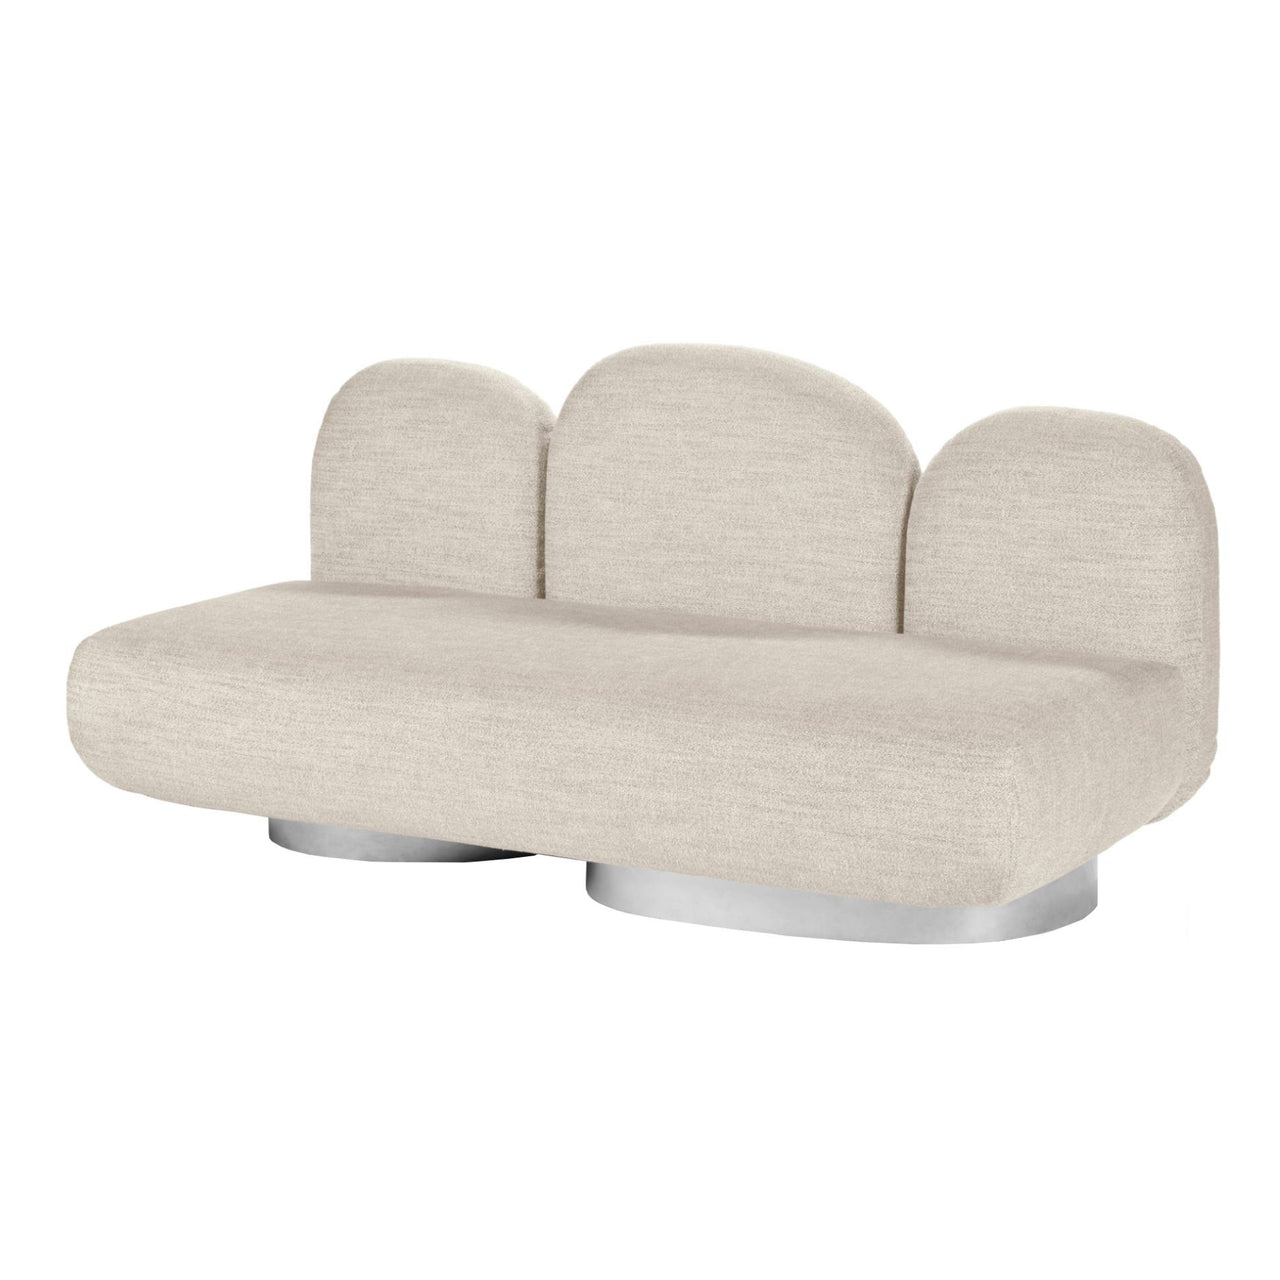 Assemble 2 Seat Sofa: Gijon Sand + Without Armrest